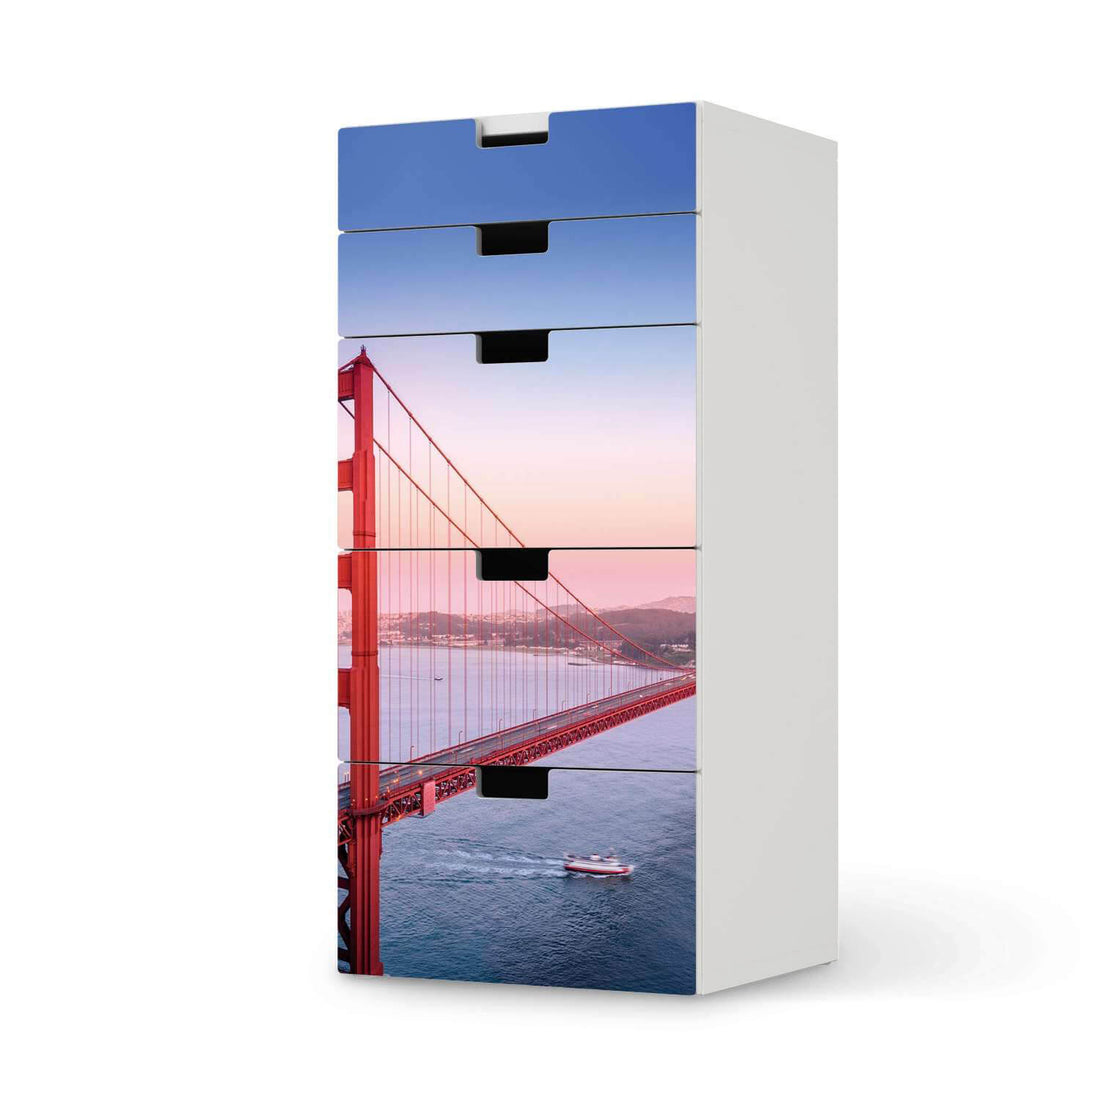 Möbel Klebefolie Golden Gate - IKEA Stuva Kommode - 5 Schubladen  - weiss